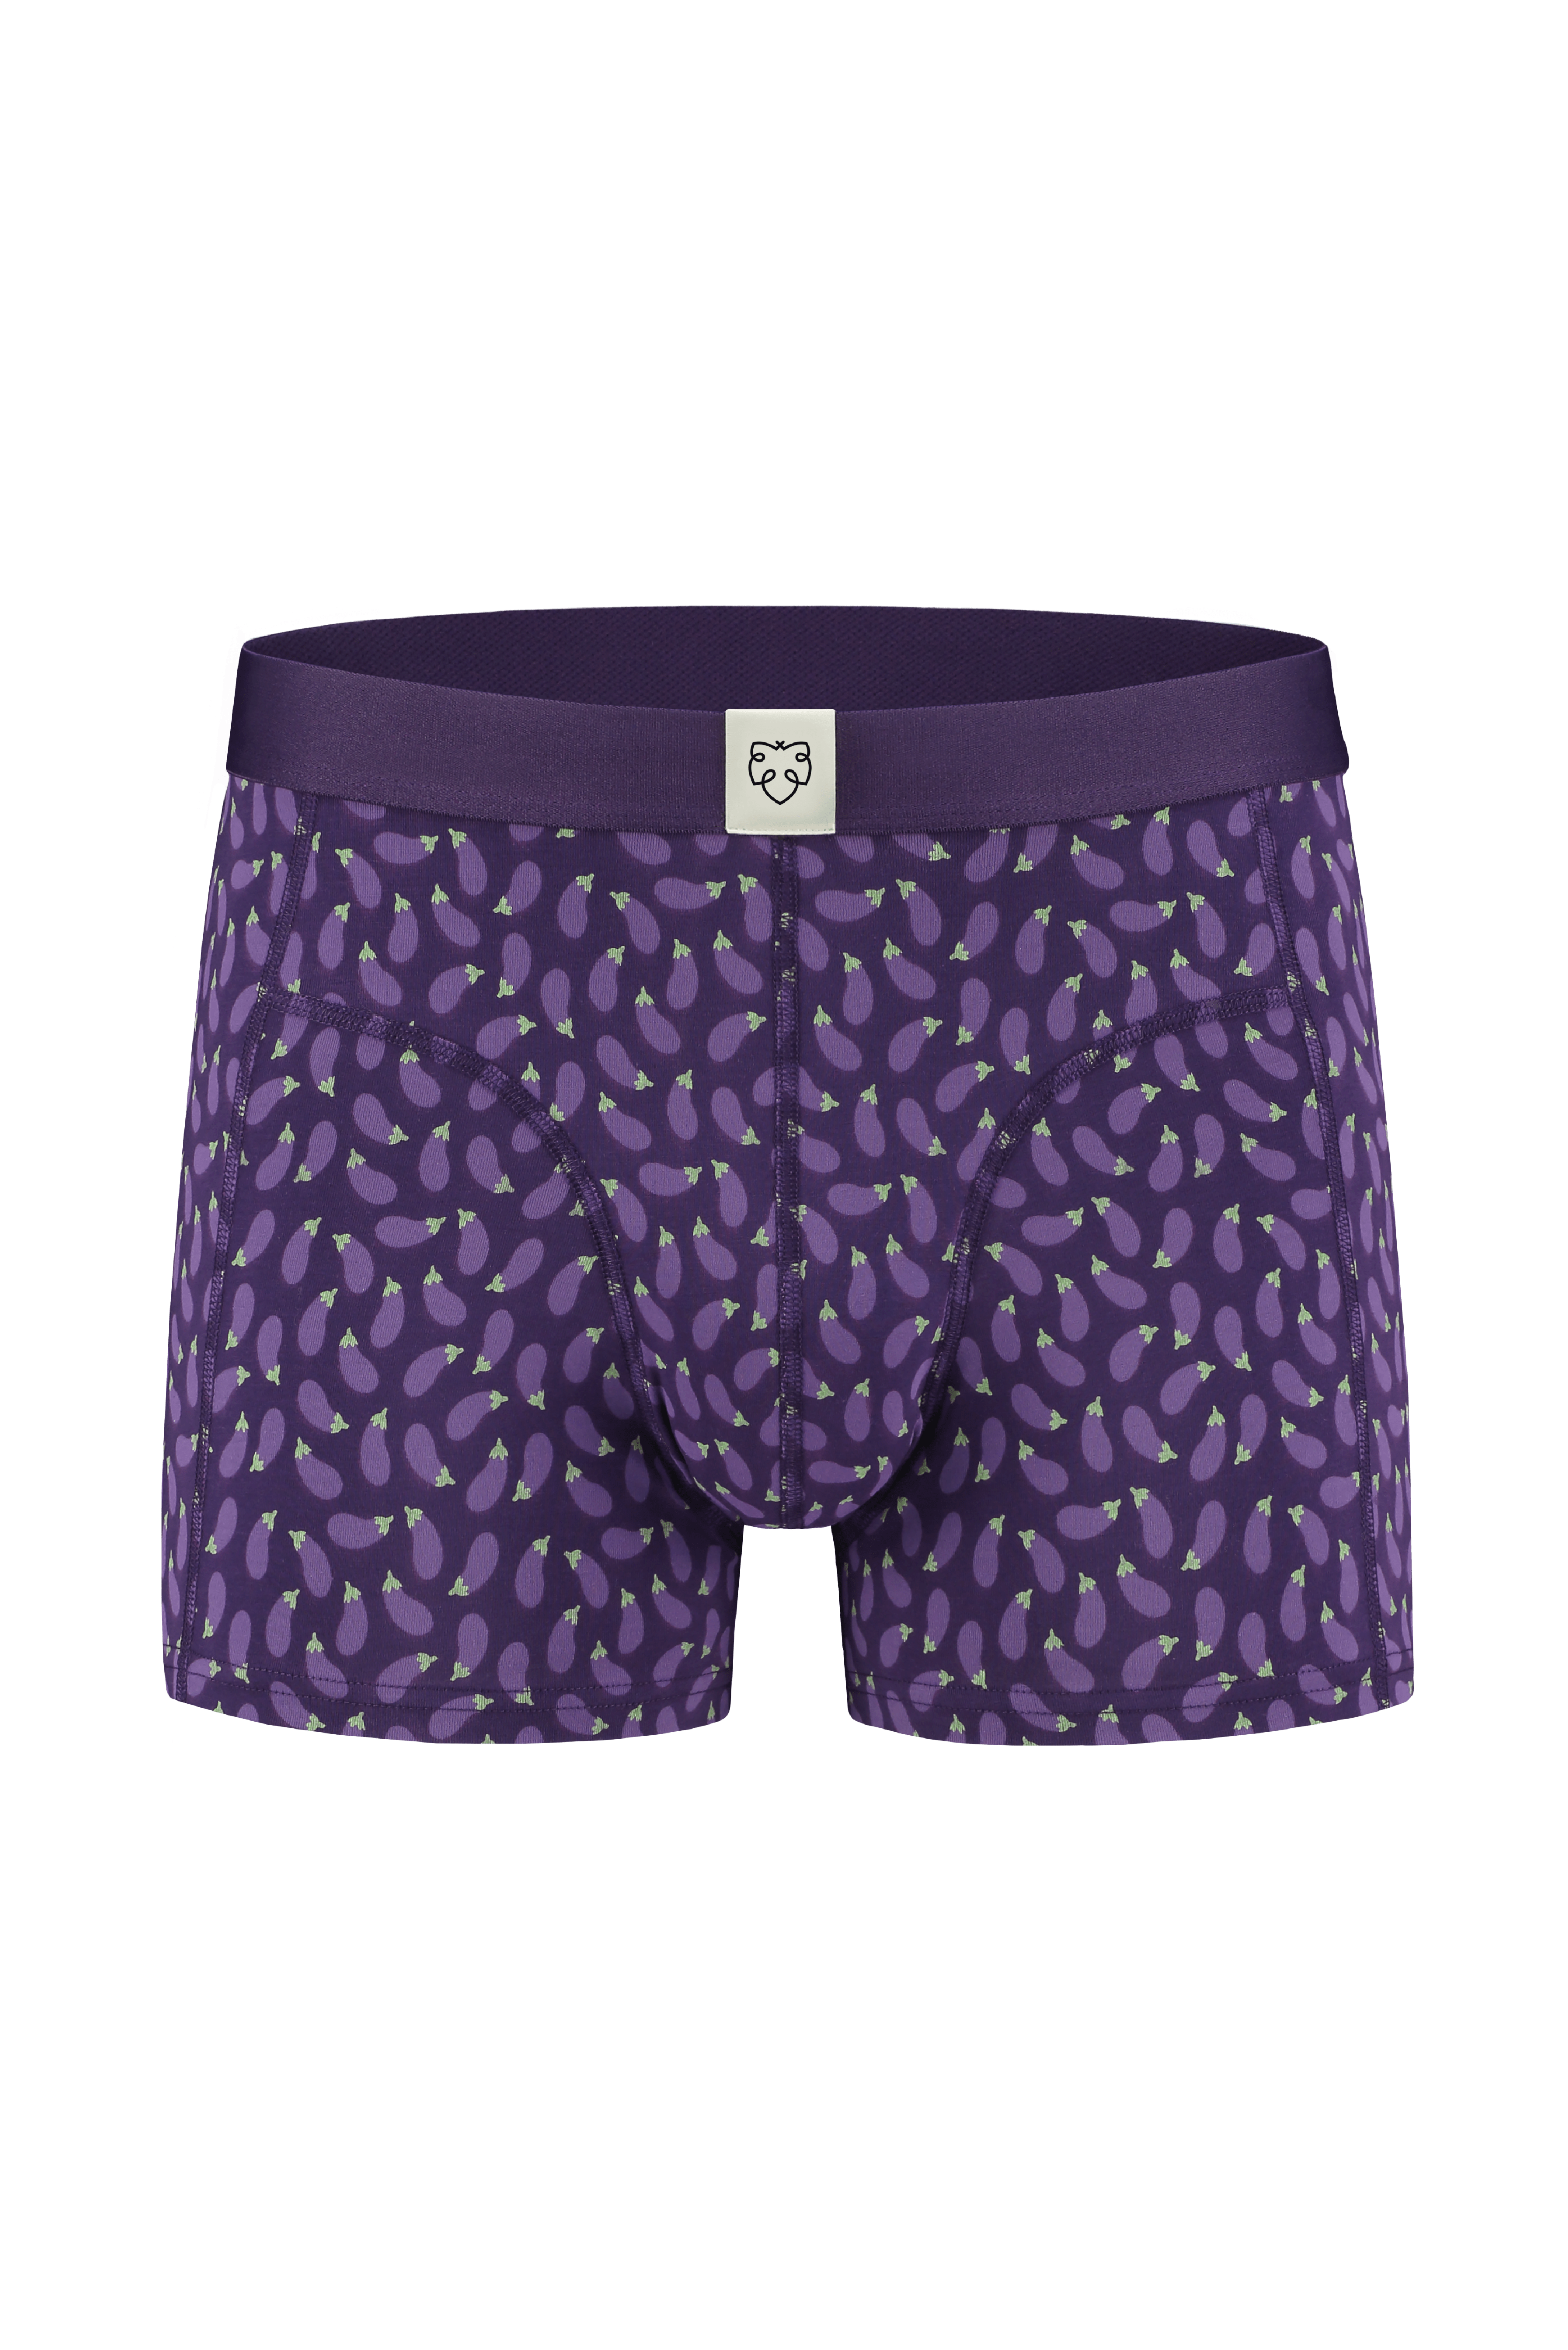 A-dam purple Boxer with aubergine emoji from GOTS pure organic